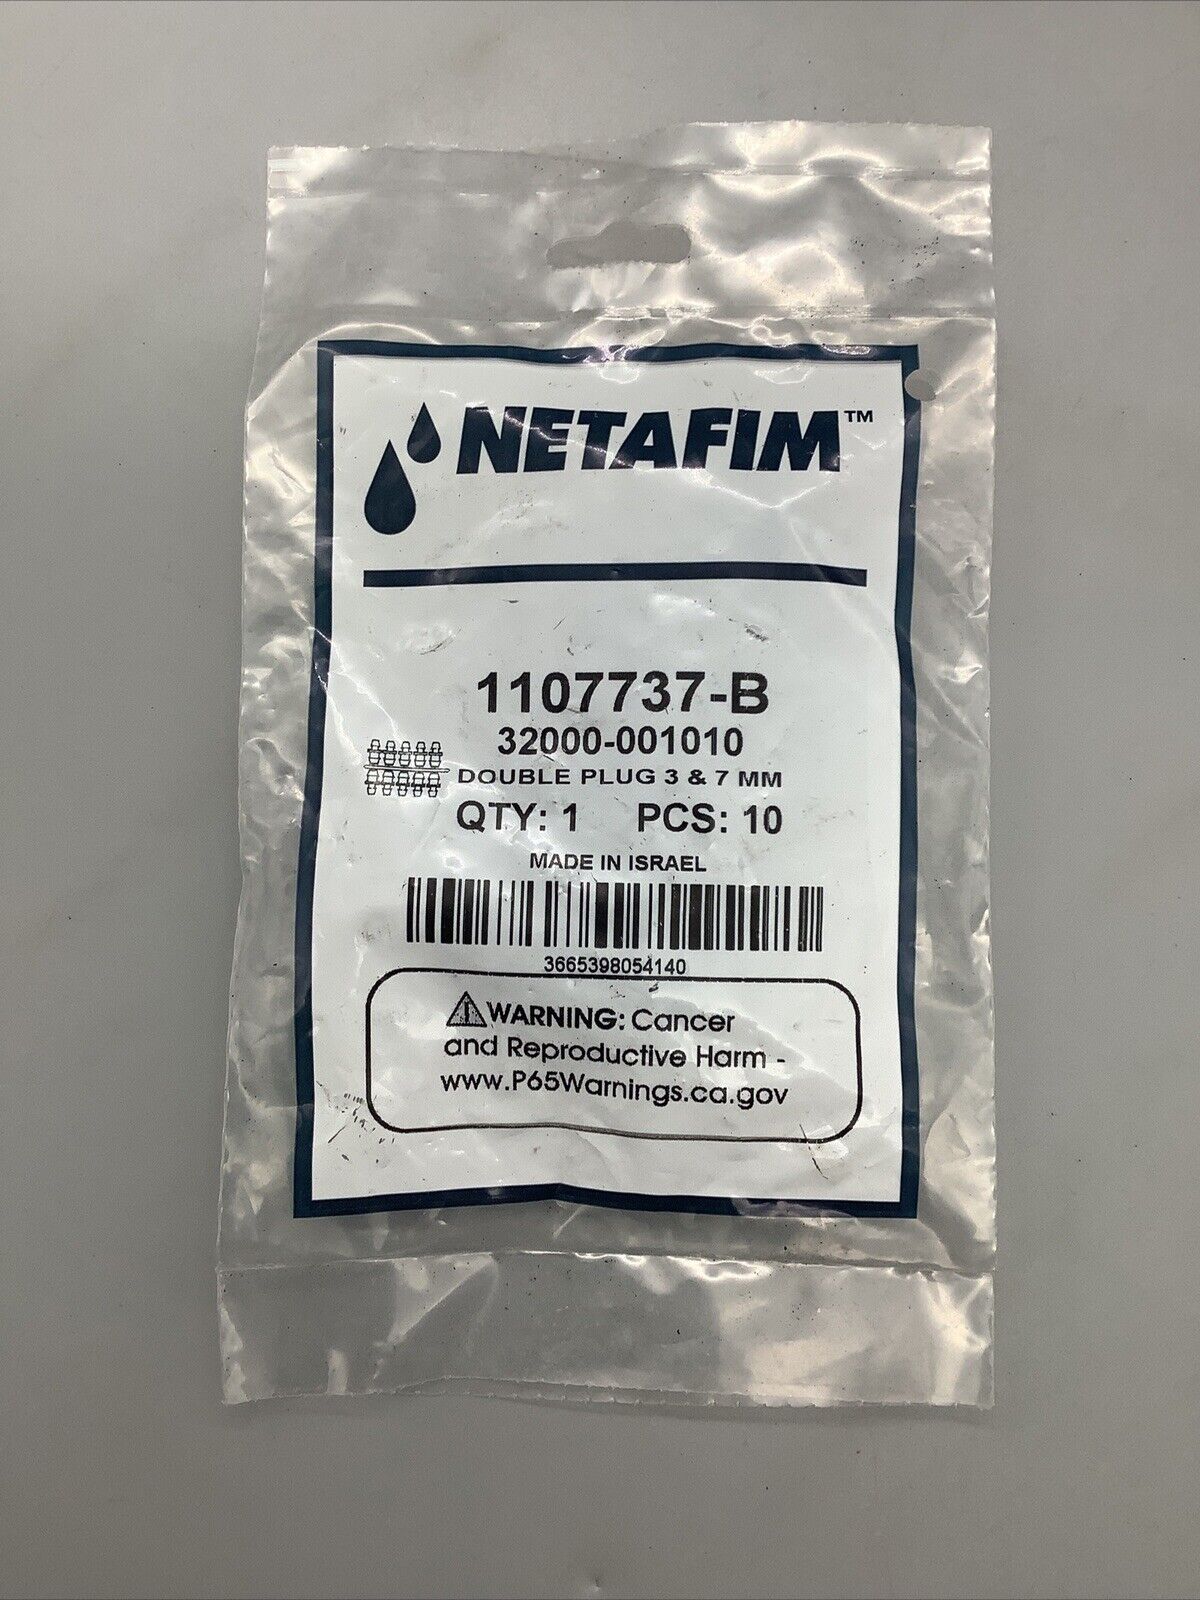 Netafim Double Goof Plug 3 & 7 MM 10 Count NEW 1107737-B